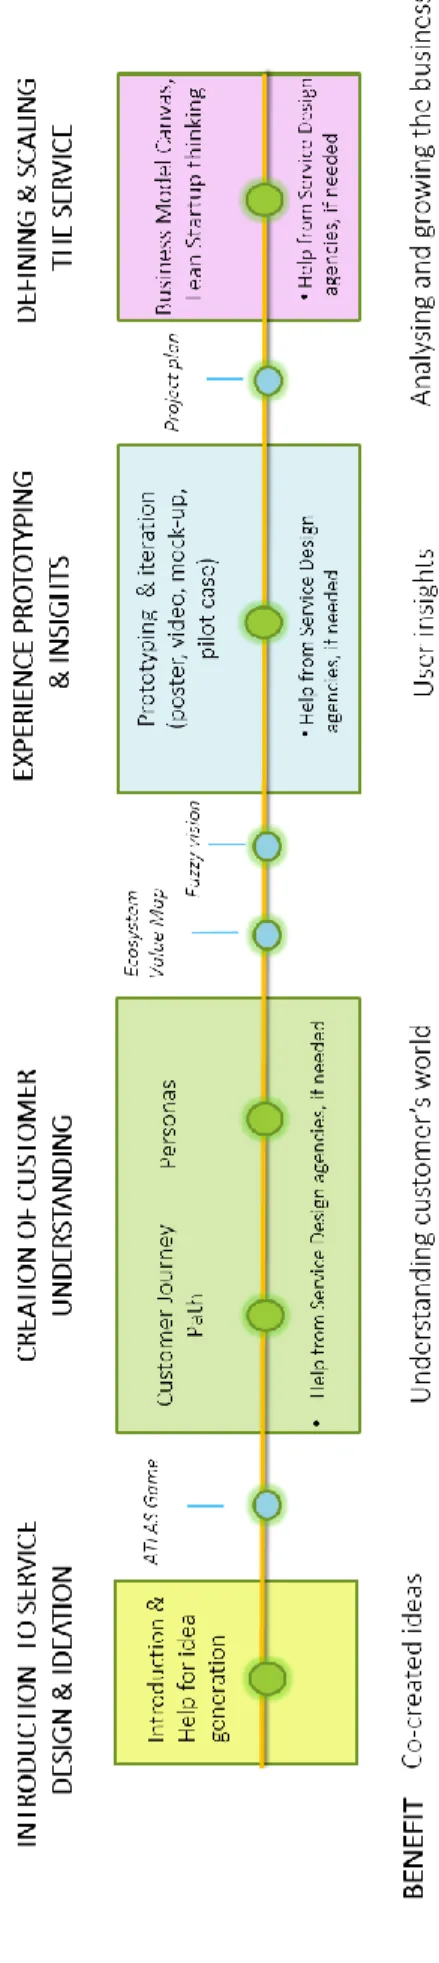 Figure 22: A visualization of the Service Design Coach concept 